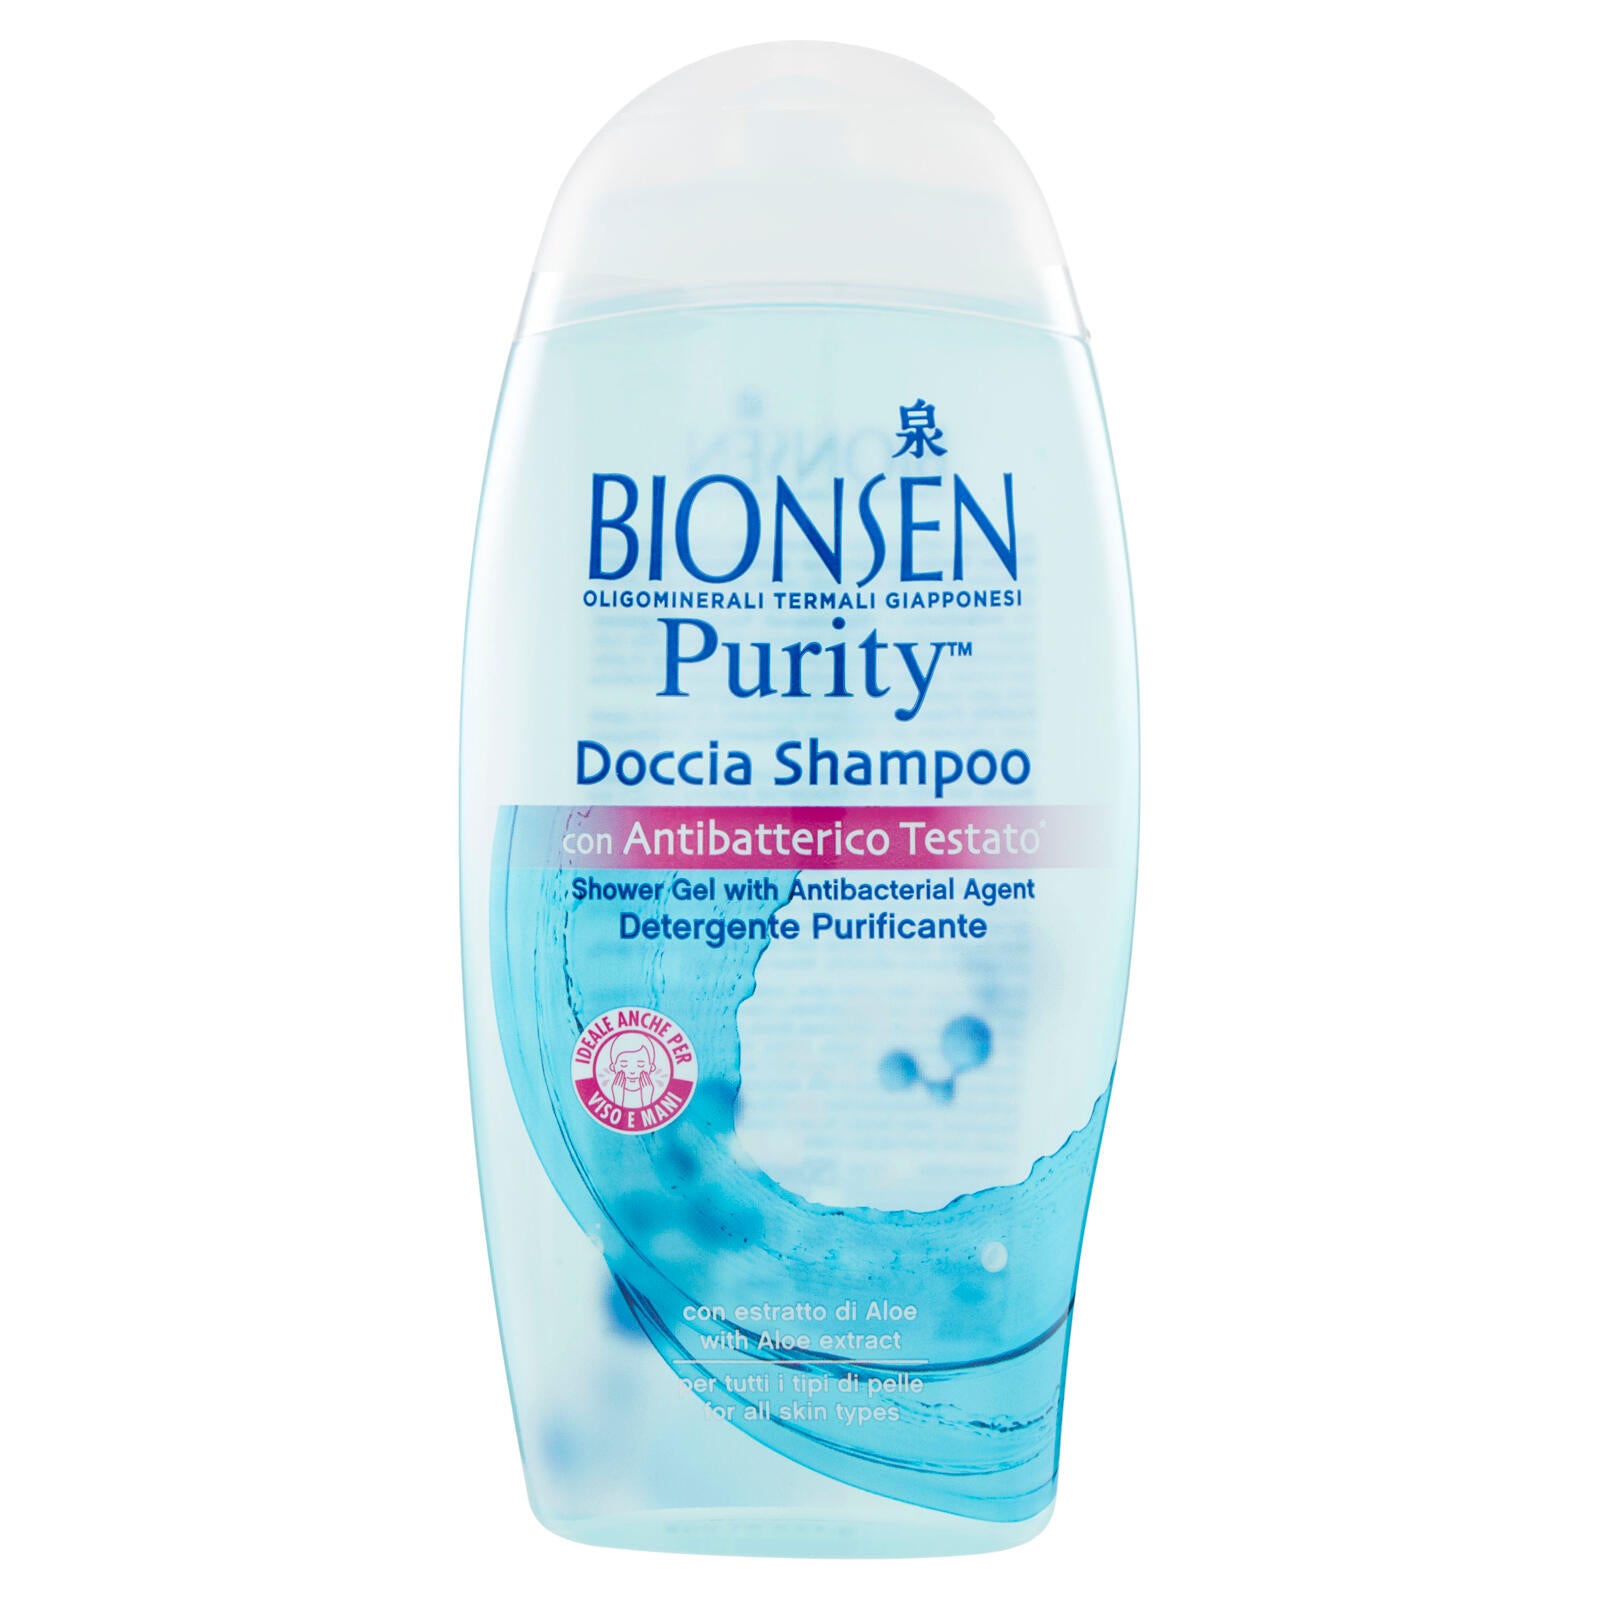 Bionsen Purity Doccia Shampoo 250 ml